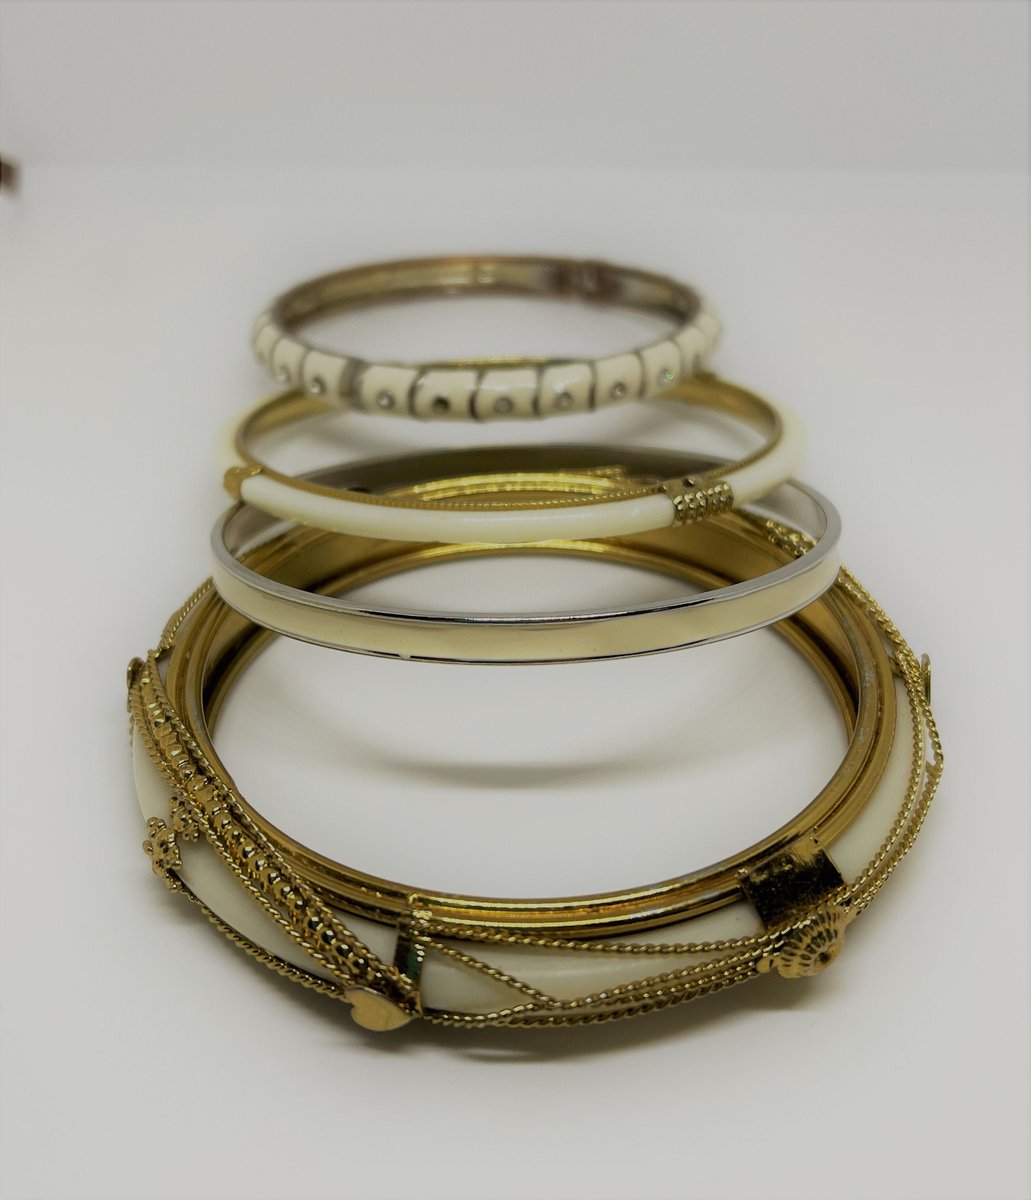 Excited to share the latest addition to my #etsy shop: Vintage Bracelet Lot//Vintage Bangle Bracelets//Signed Sequin Bracelet//Vintage Jewelry Lot Bracelets Cream Color Enamel etsy.me/3alZ5VG #beige #gold #no #bohohippie #vintagejewelrylot #vintagejewelry #brac